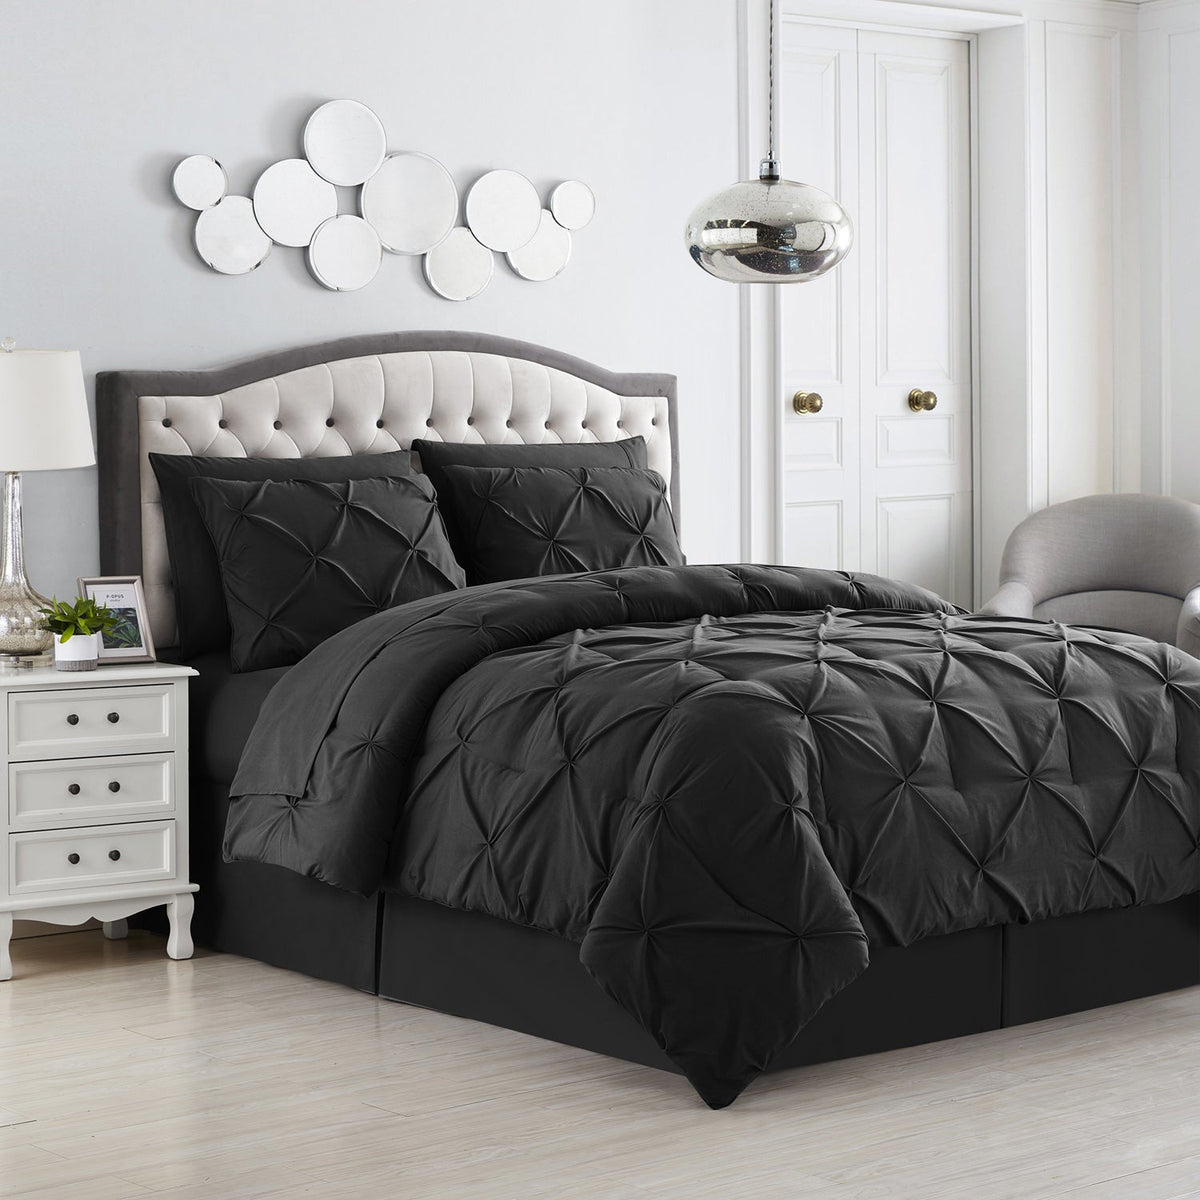 Pintuck 8-Piece Bed In A Bag Comforter Set Black - Bed